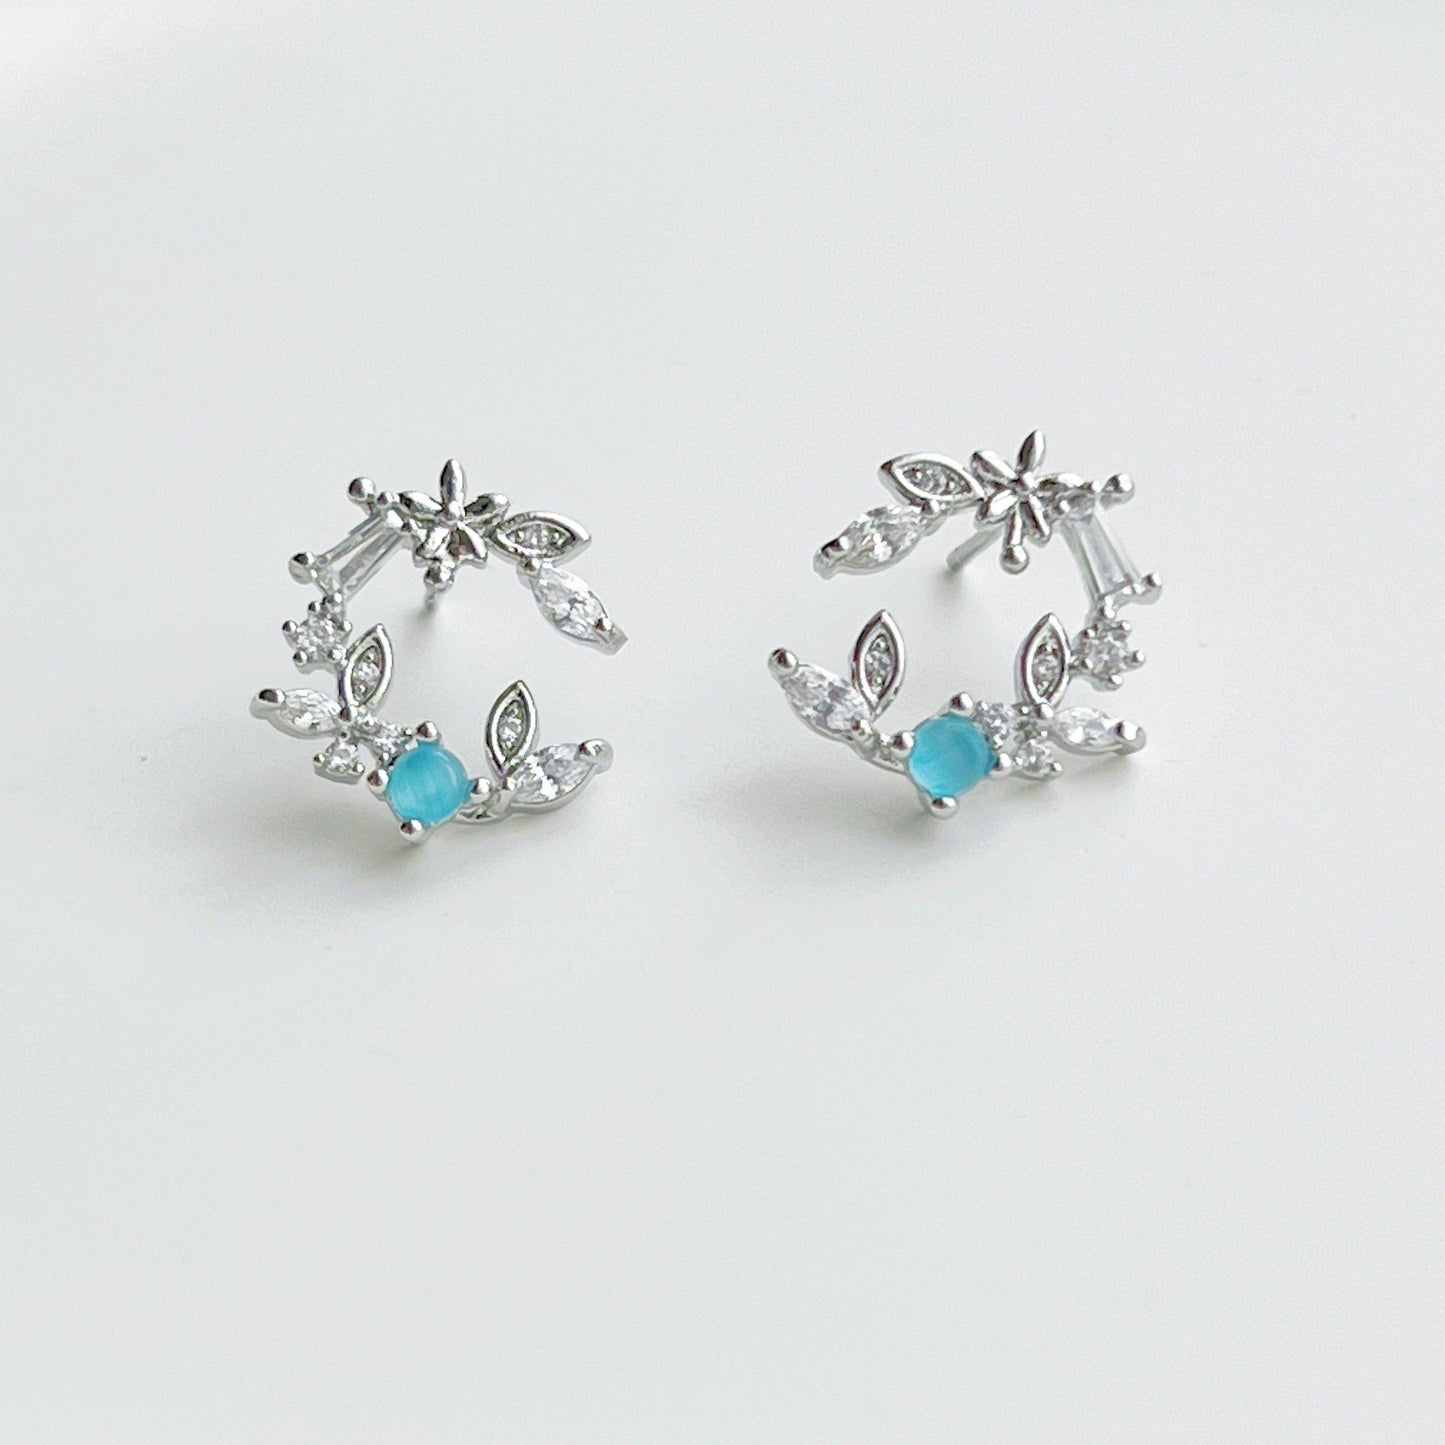 Olive Leave Crown Earrings - Leave Wreath with Blue Crystal Stud Earrings-Ninaouity